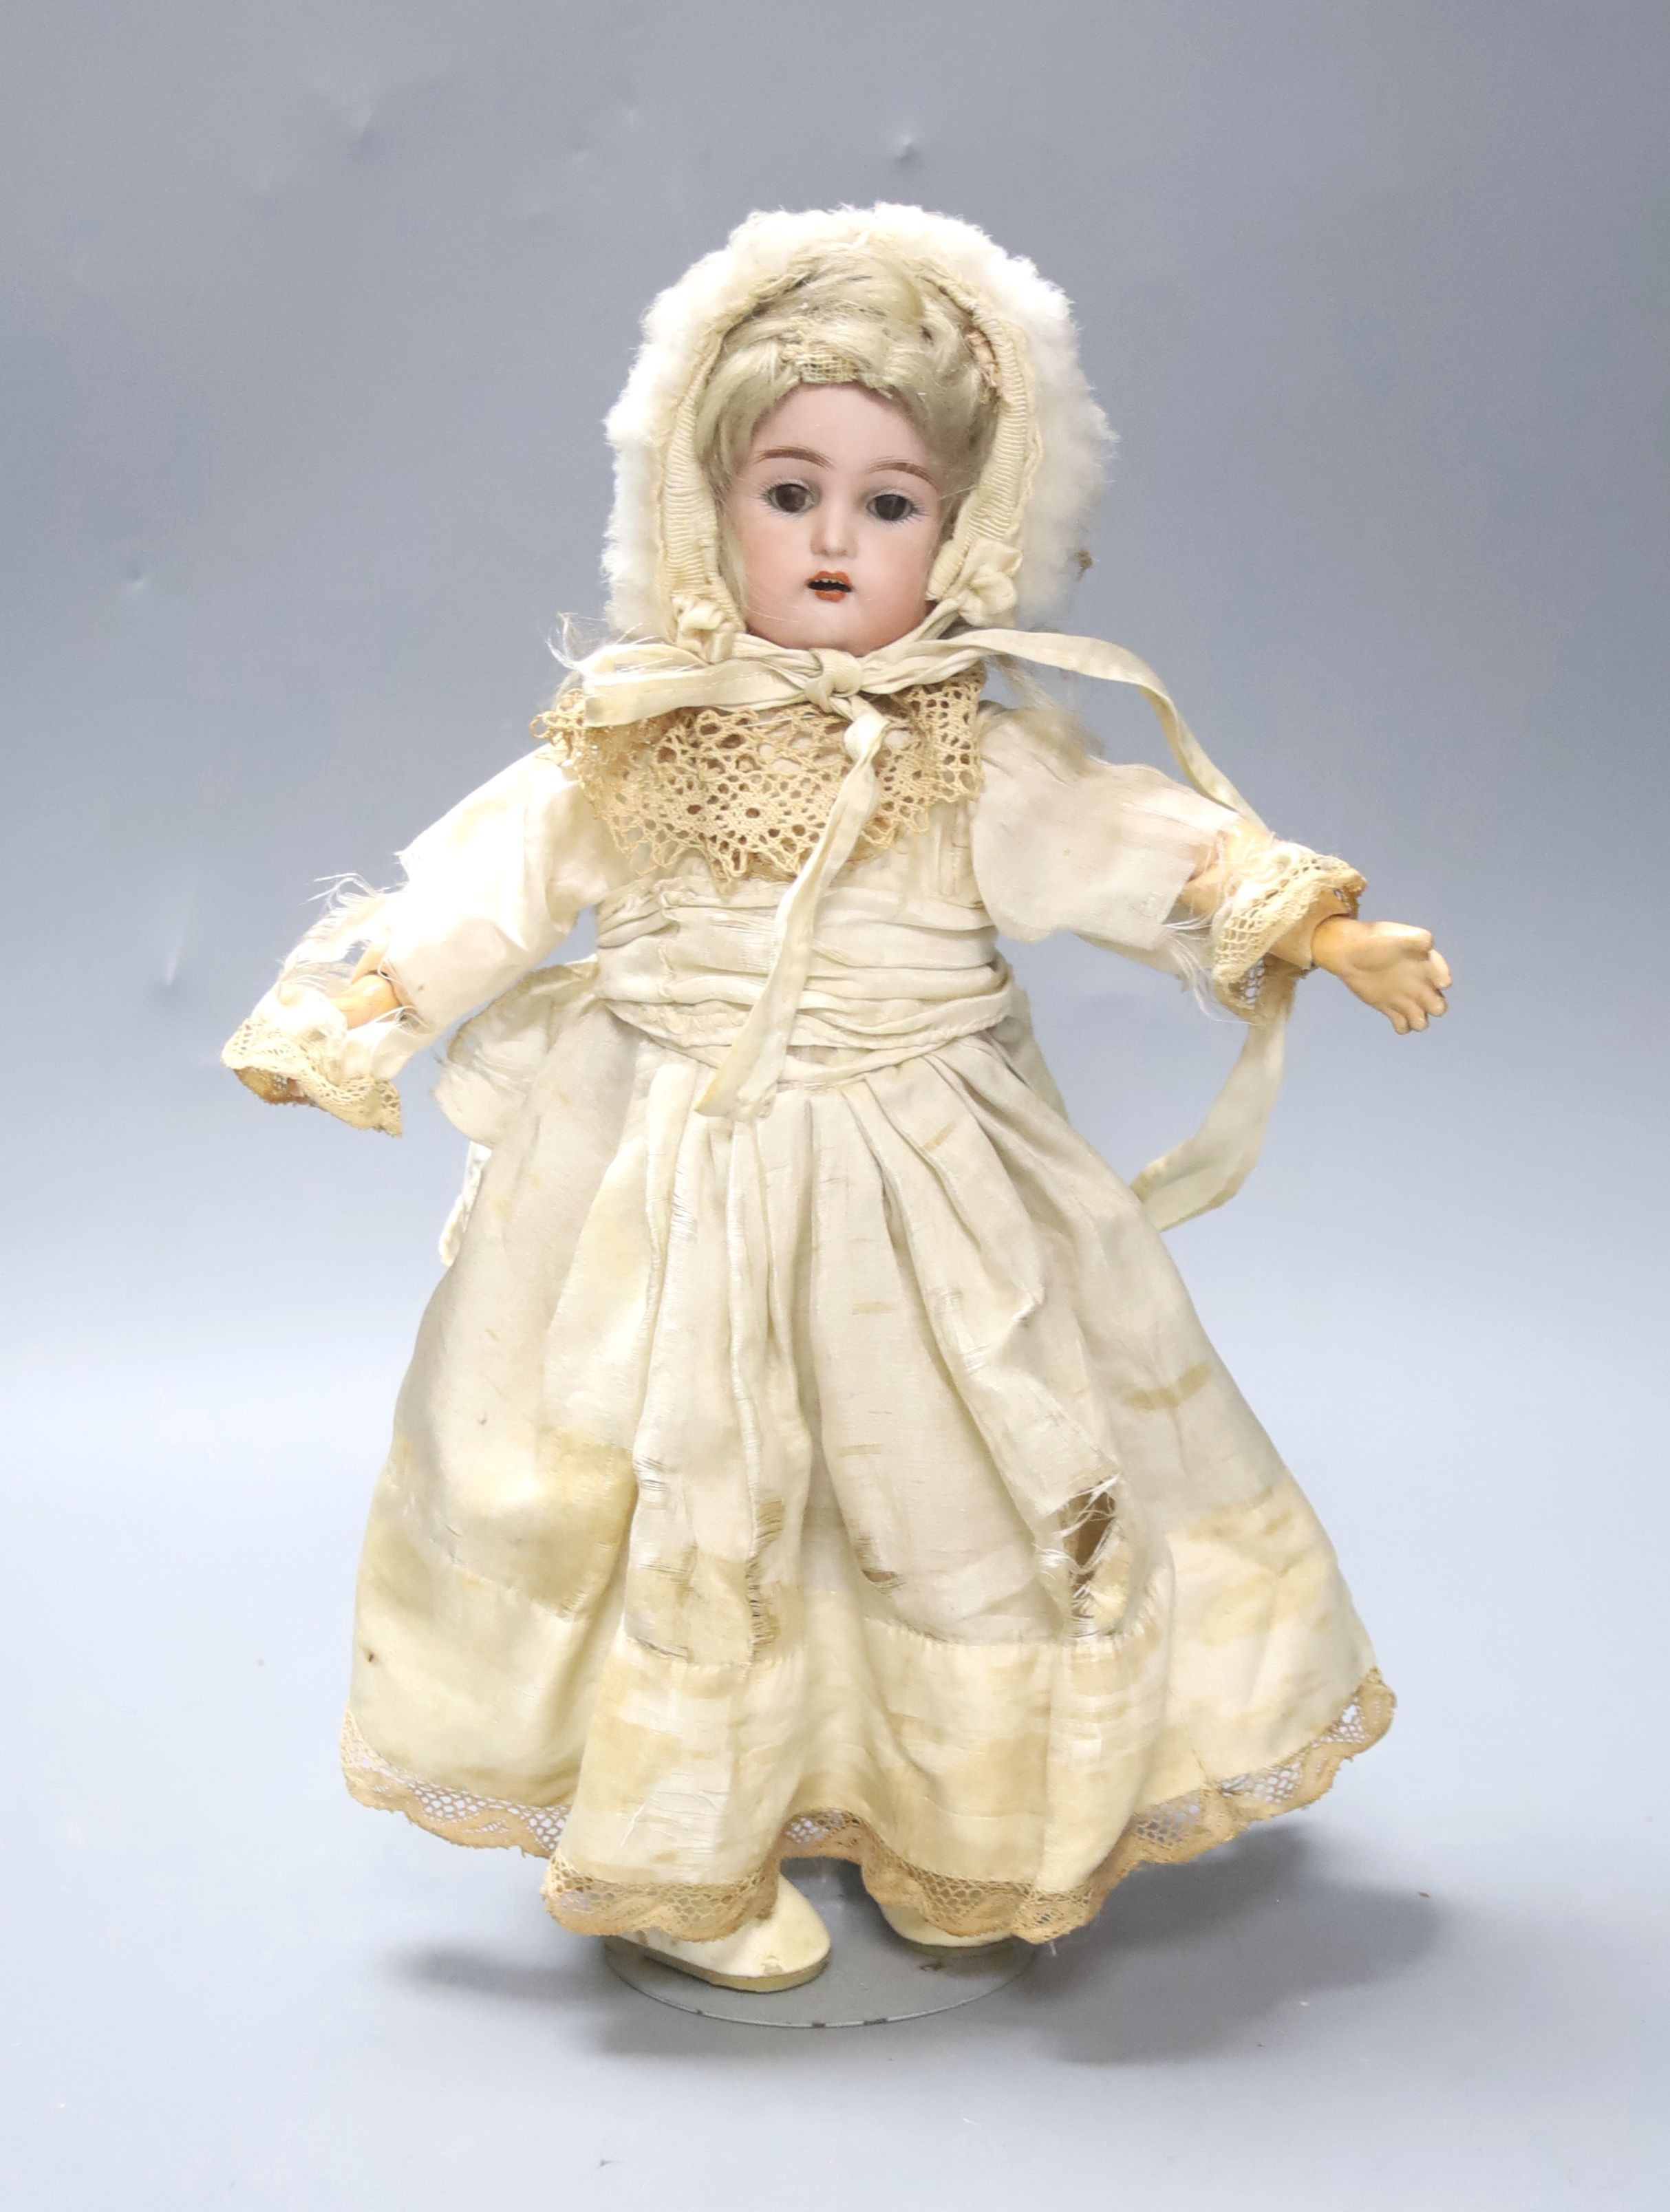 A Kammer & Reinhardt bisque doll, original clothes and shoes, 29cm